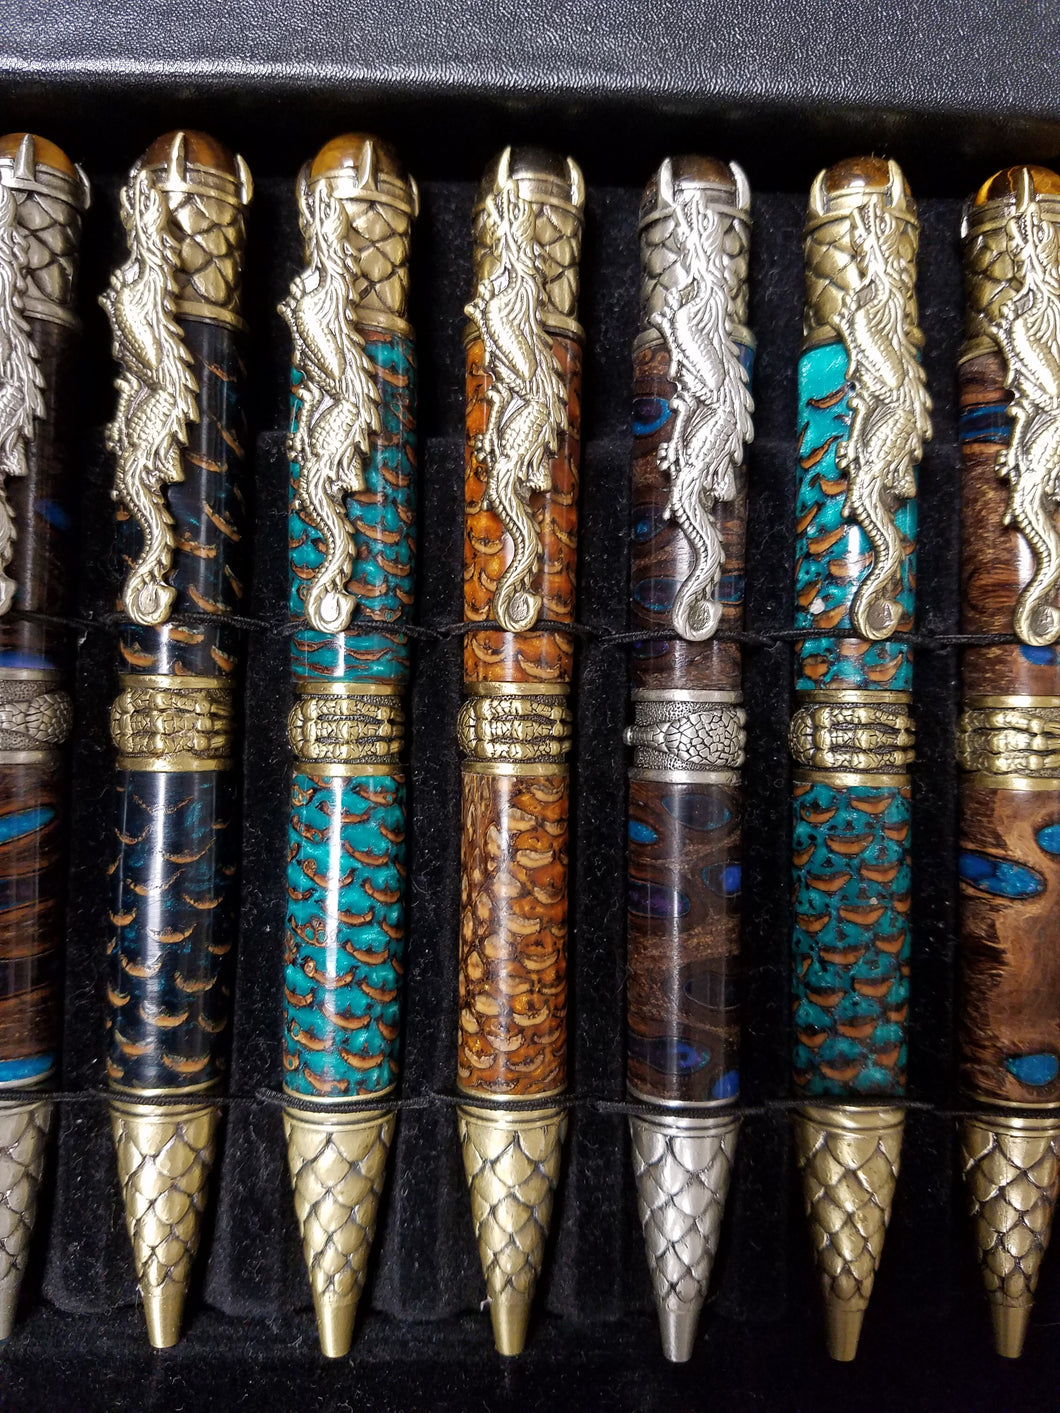 Dragon Pens, Hybred Acrylic and Wood